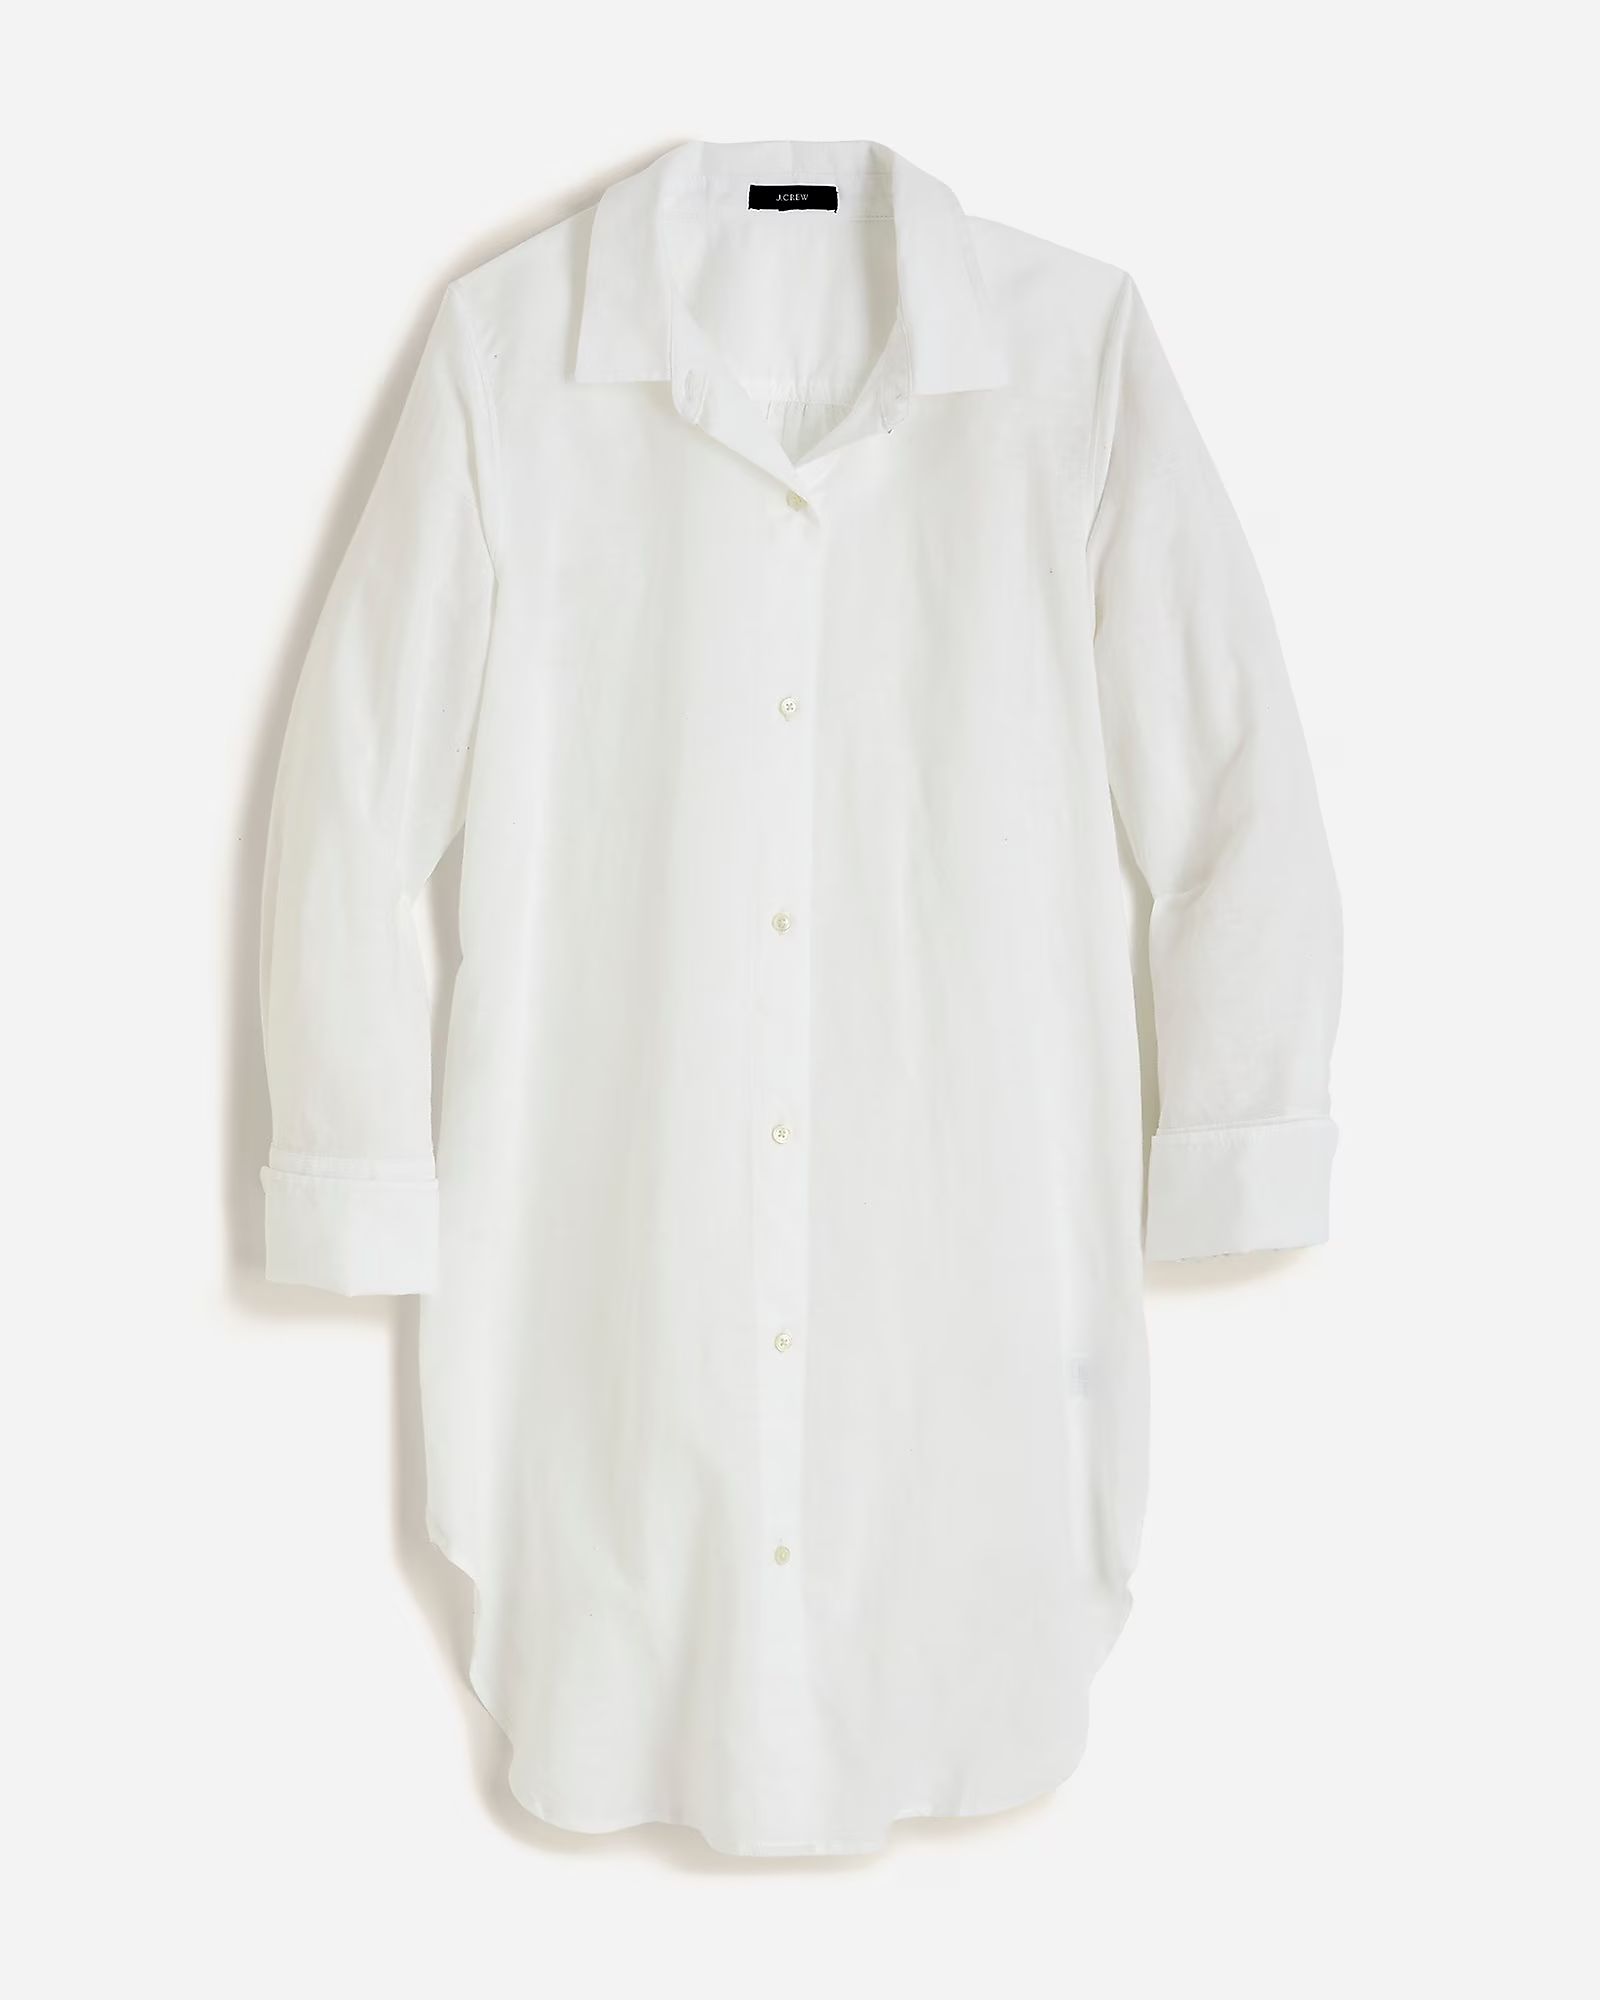 Classic-fit beach shirt in linen-cotton blend | J.Crew US